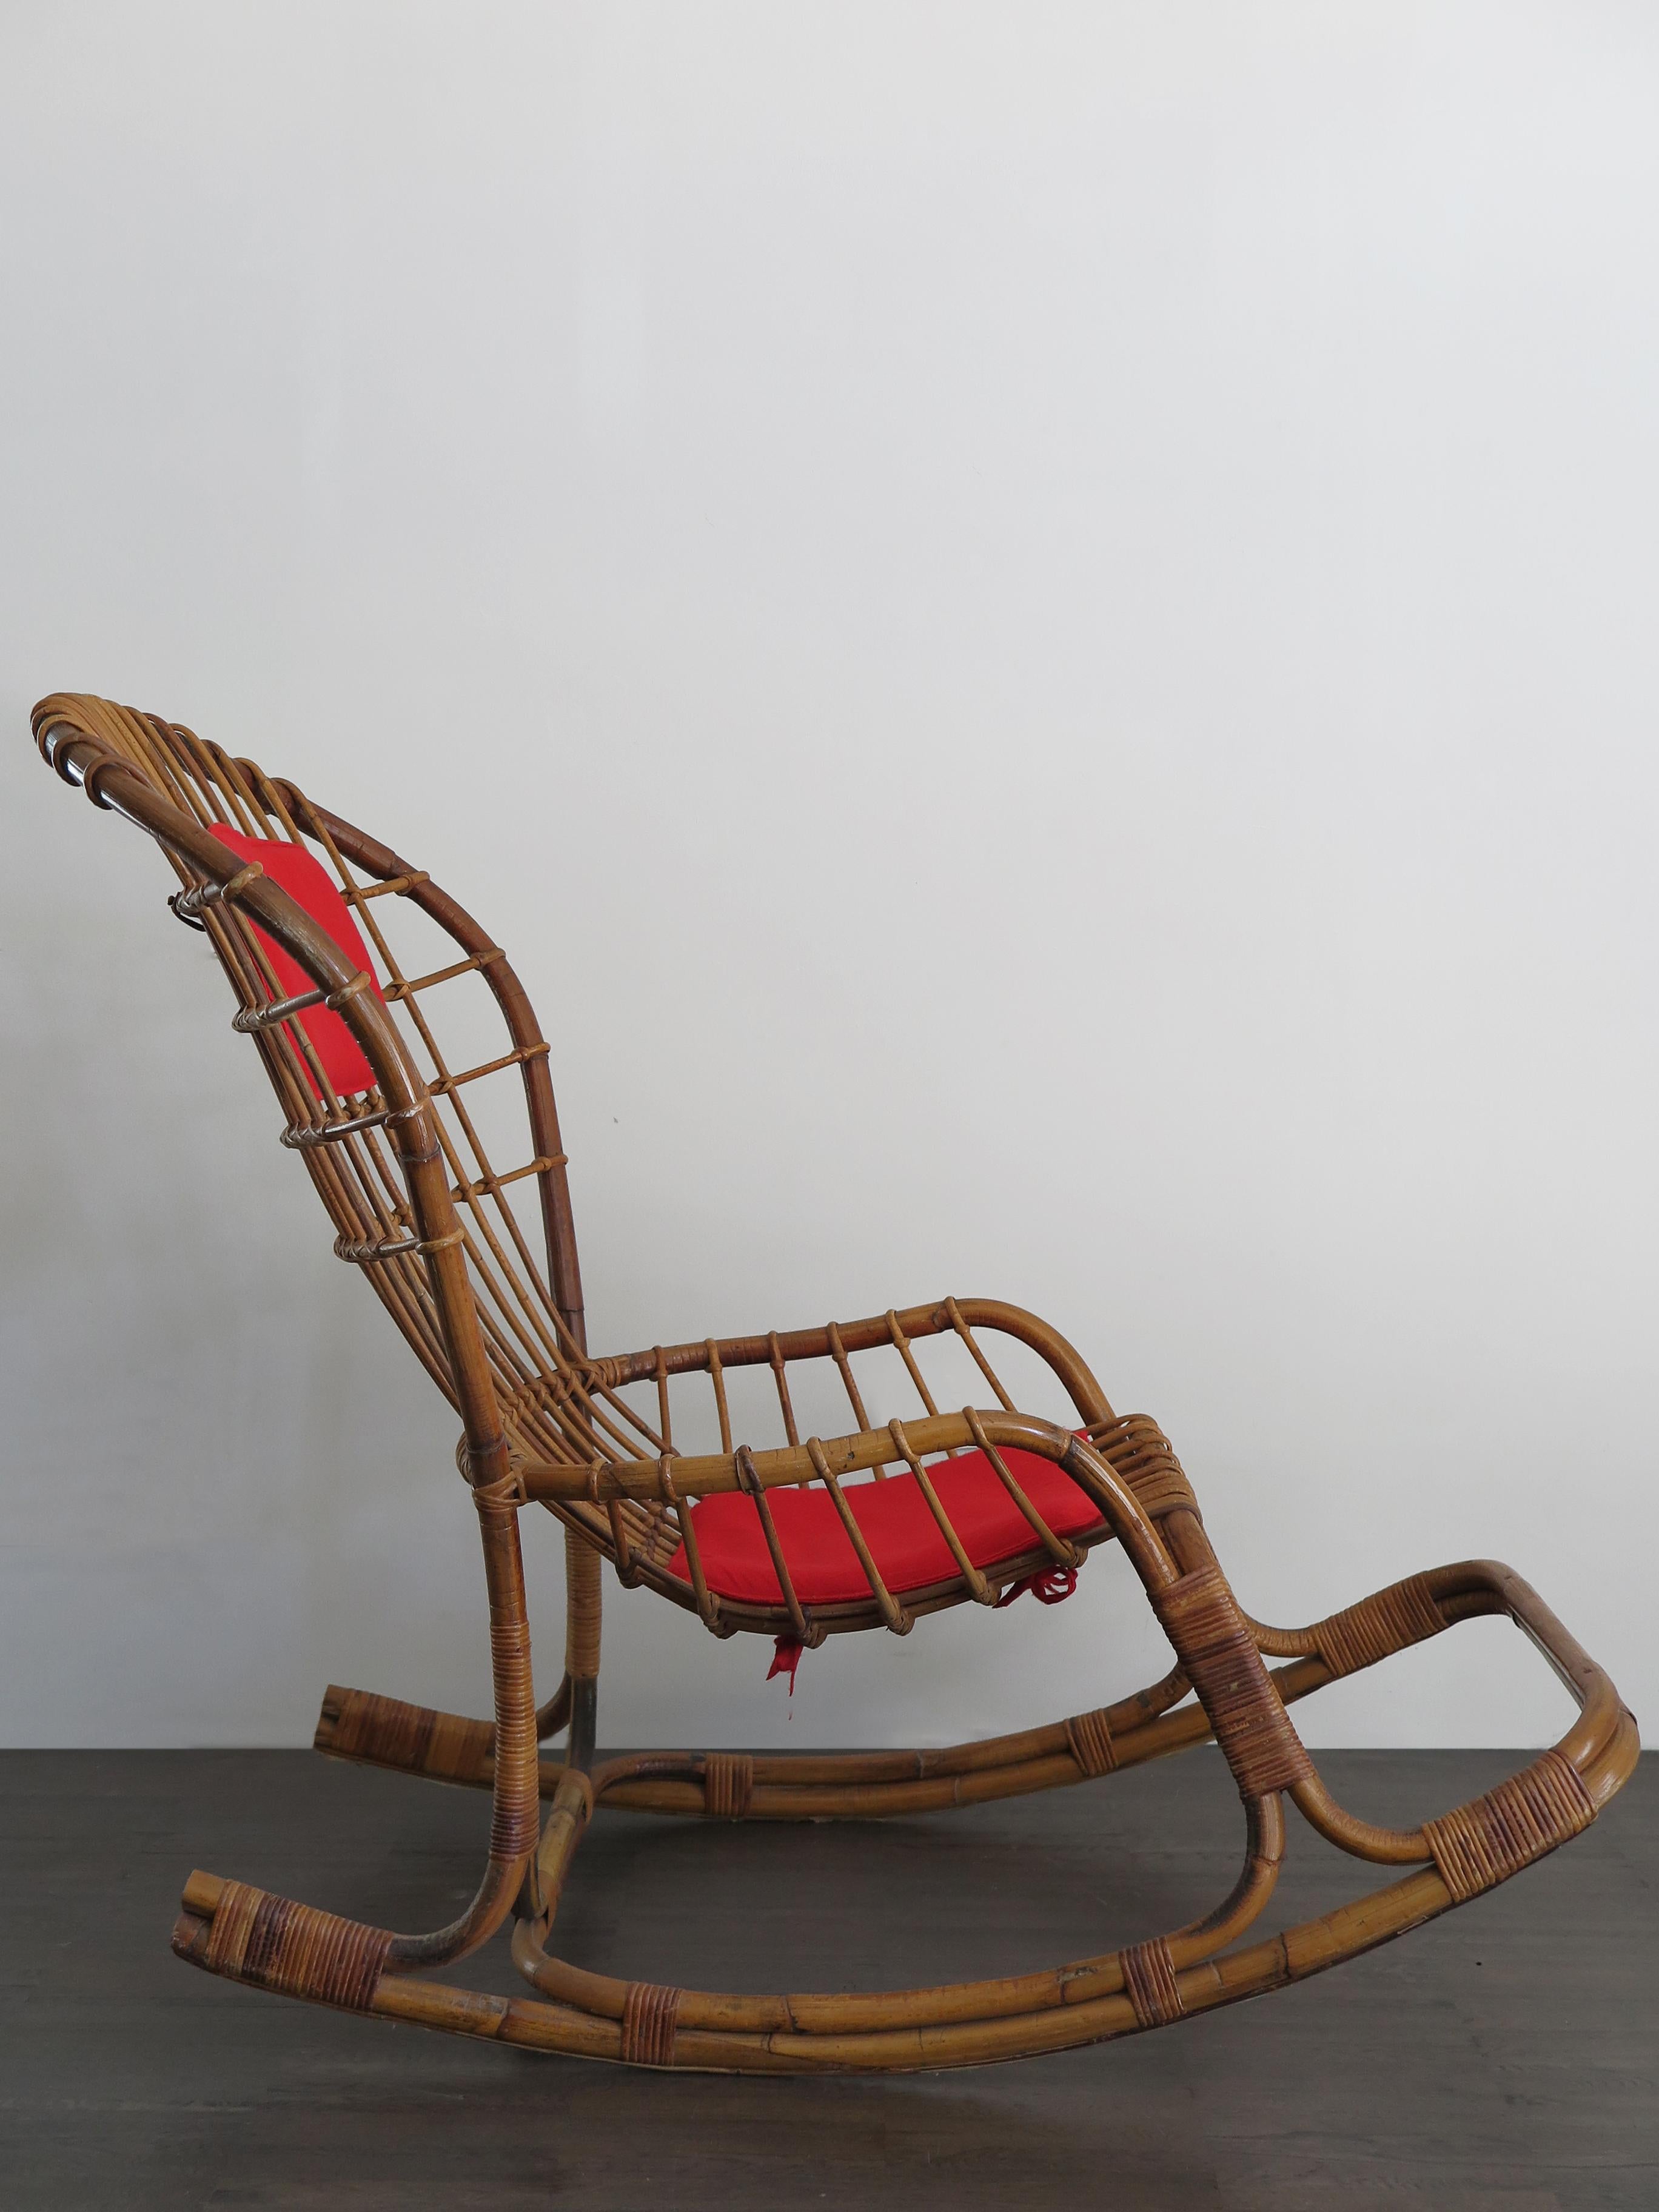 Italian Mid-Century Modern design rocking chair model ‘BP 12’ designed by Haruki Miyagima and manufactured by Pierantonio Bonacina with frame in rattan, rush, and fabric upholstered cushions, 1960s.
Literature:
Pierantonio Bonacina 1960s catalog,